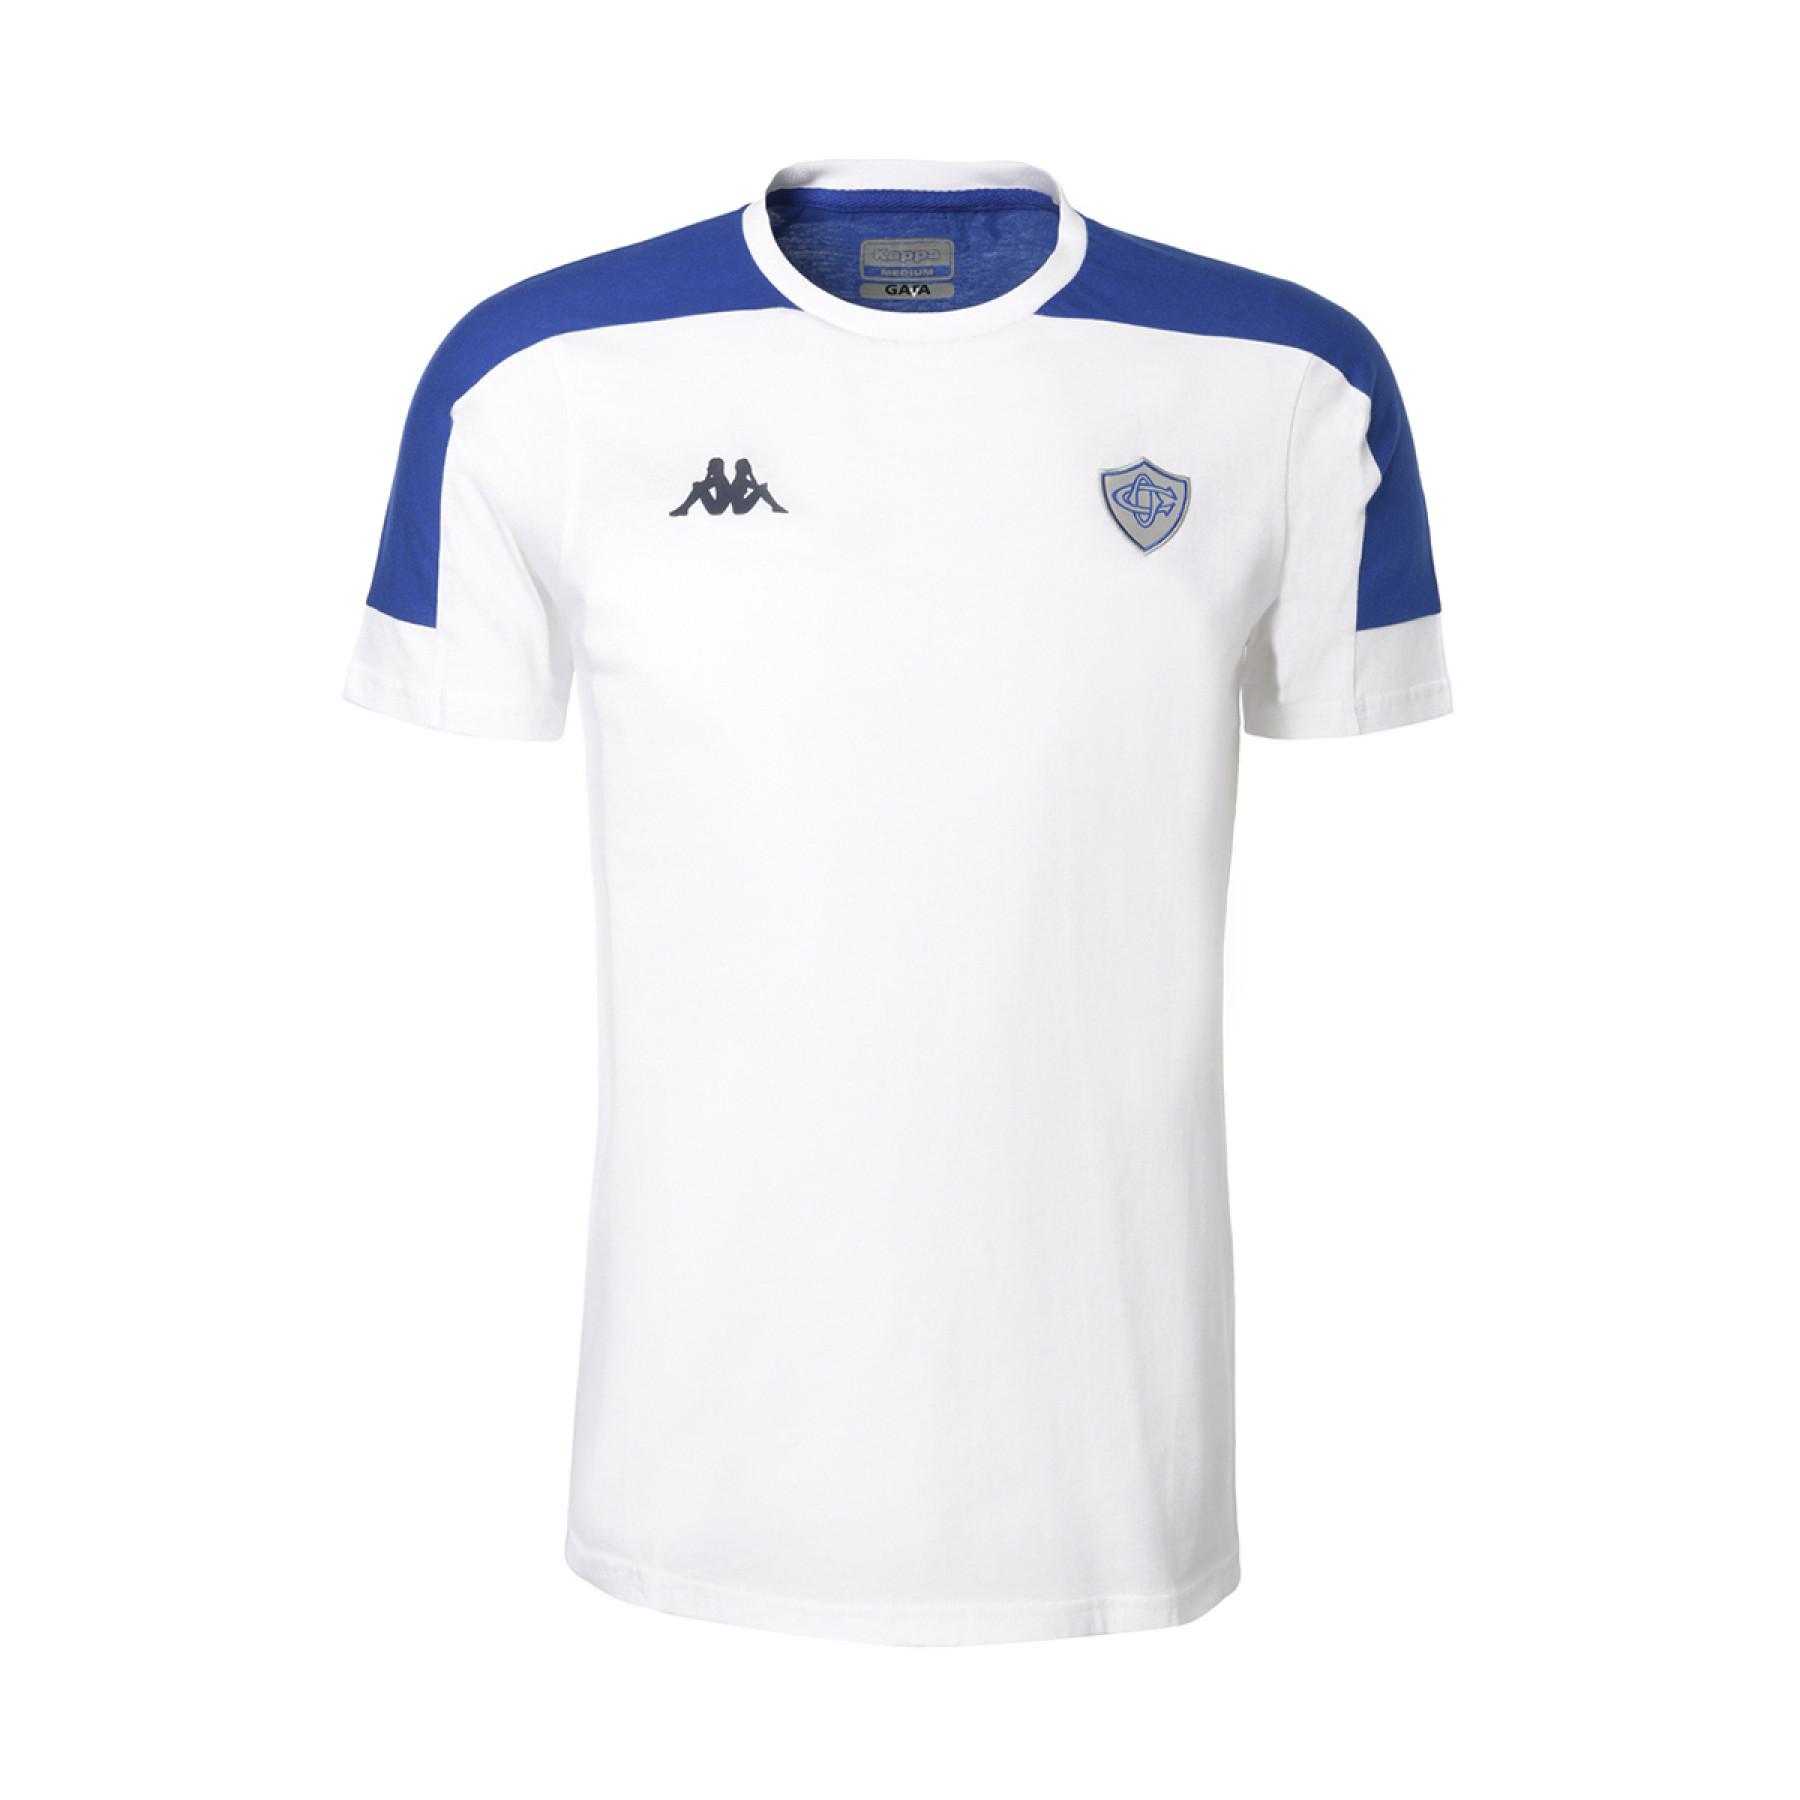 Child's T-shirt Castres Olympique 2020/21 algardi